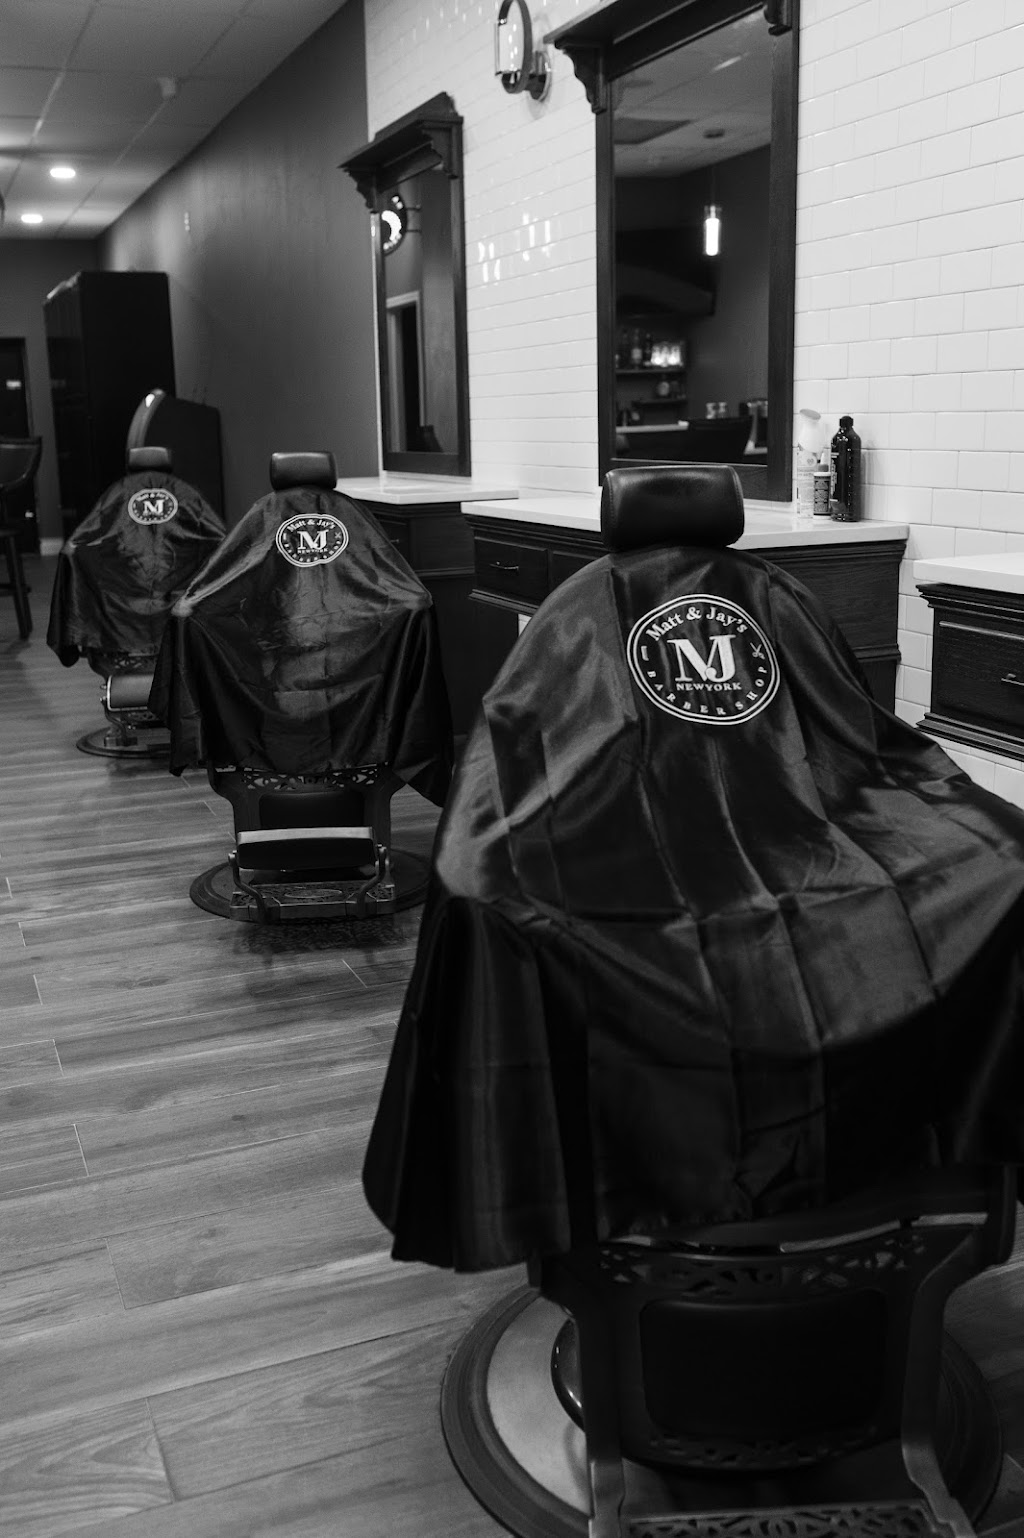 Matt & Jays Barber Shop | 430 N Country Rd, St James, NY 11780 | Phone: (631) 901-8949